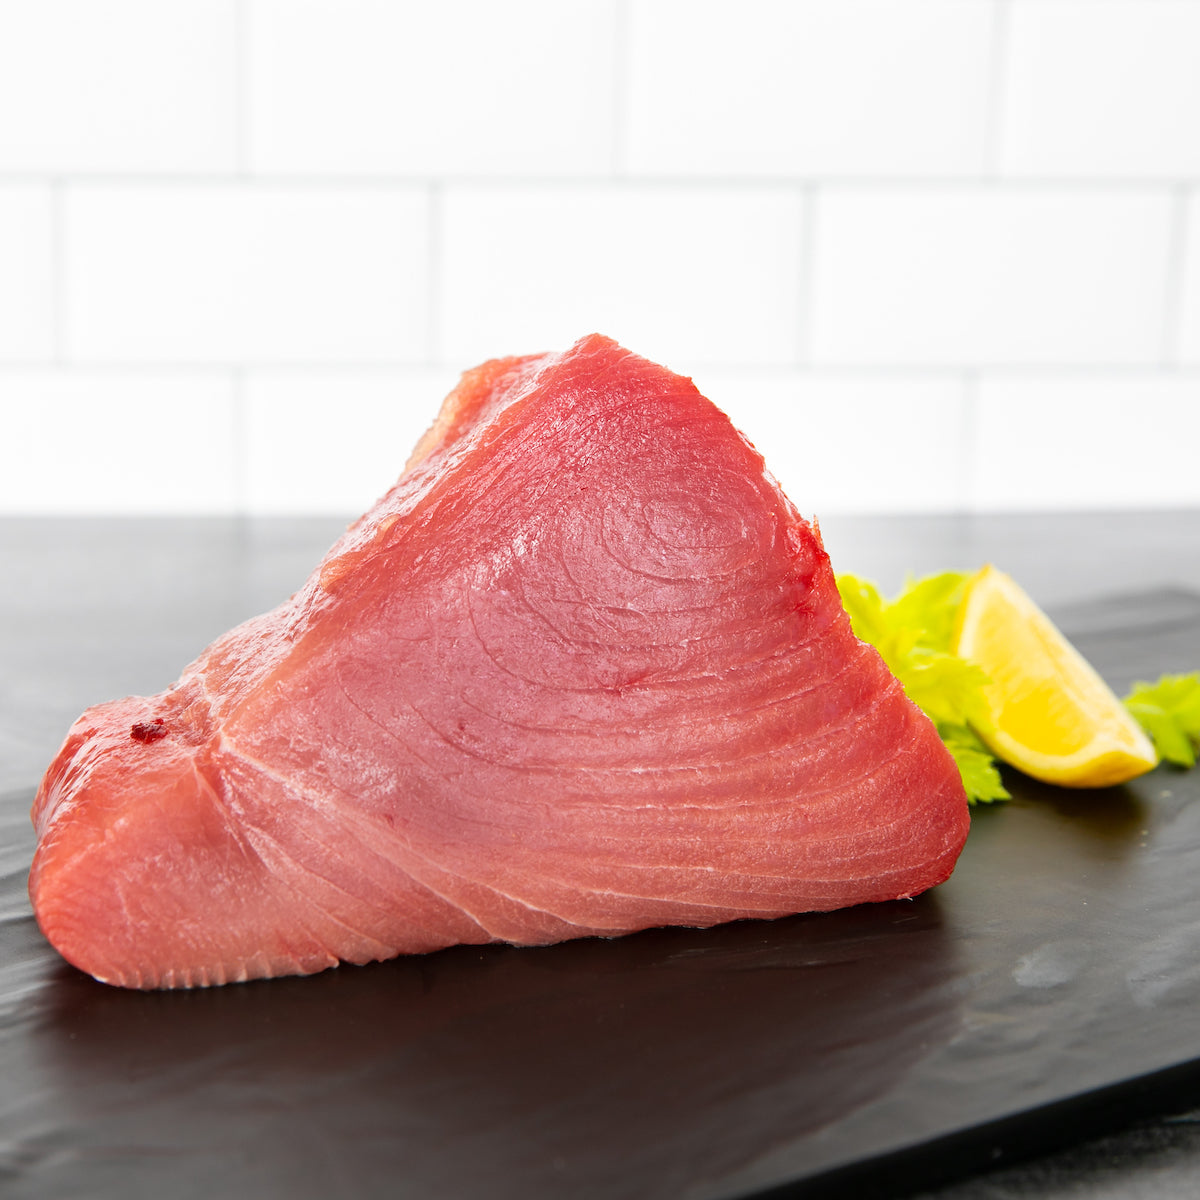 Buy wild caught grilling tuna.